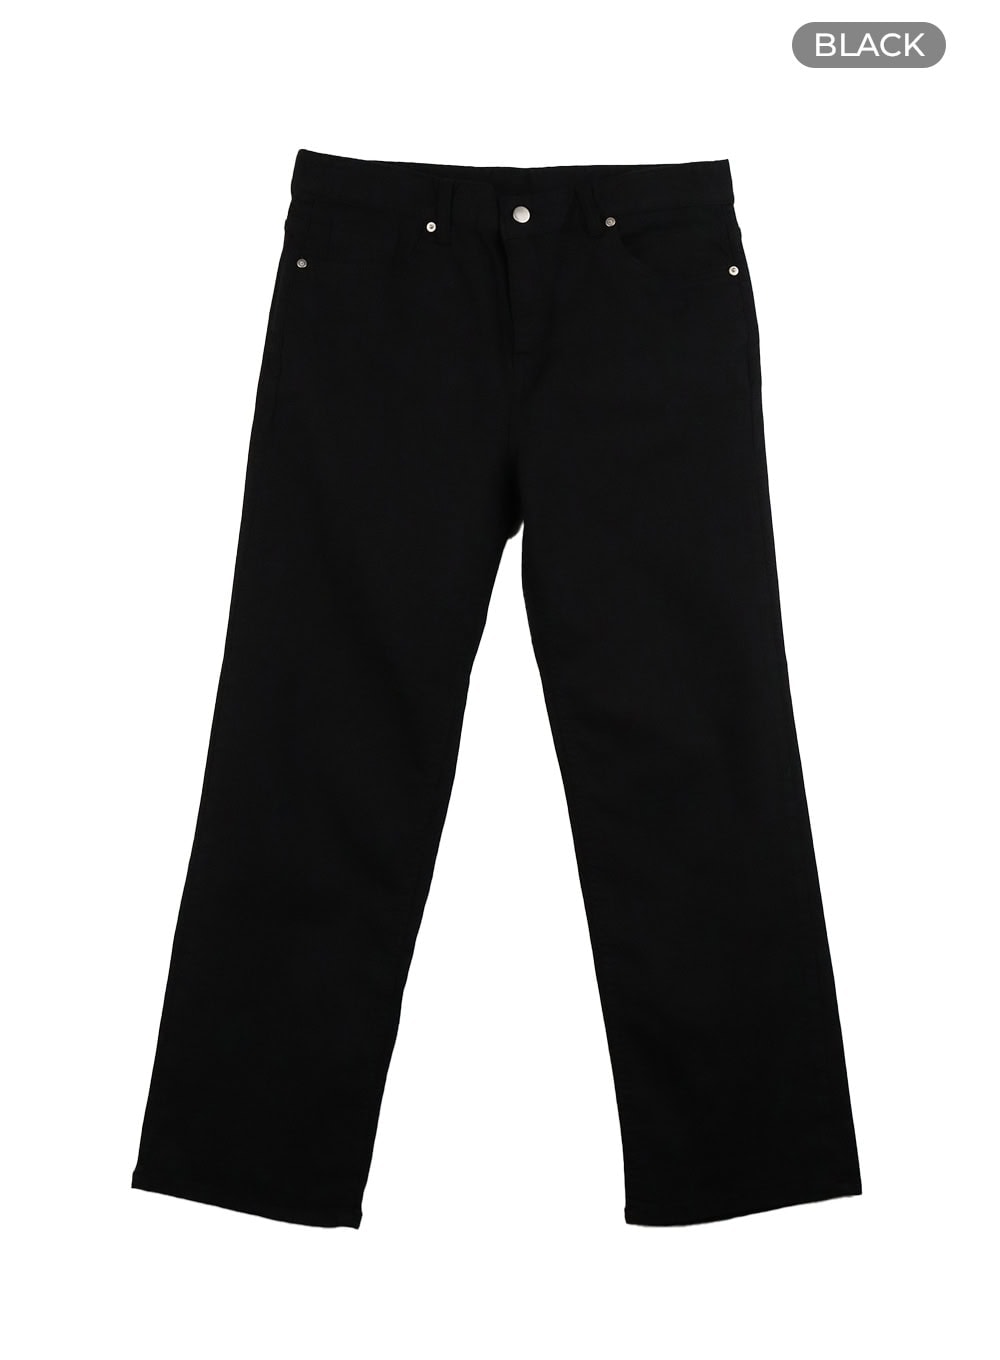 mens-basic-cotton-pants-black-iy416